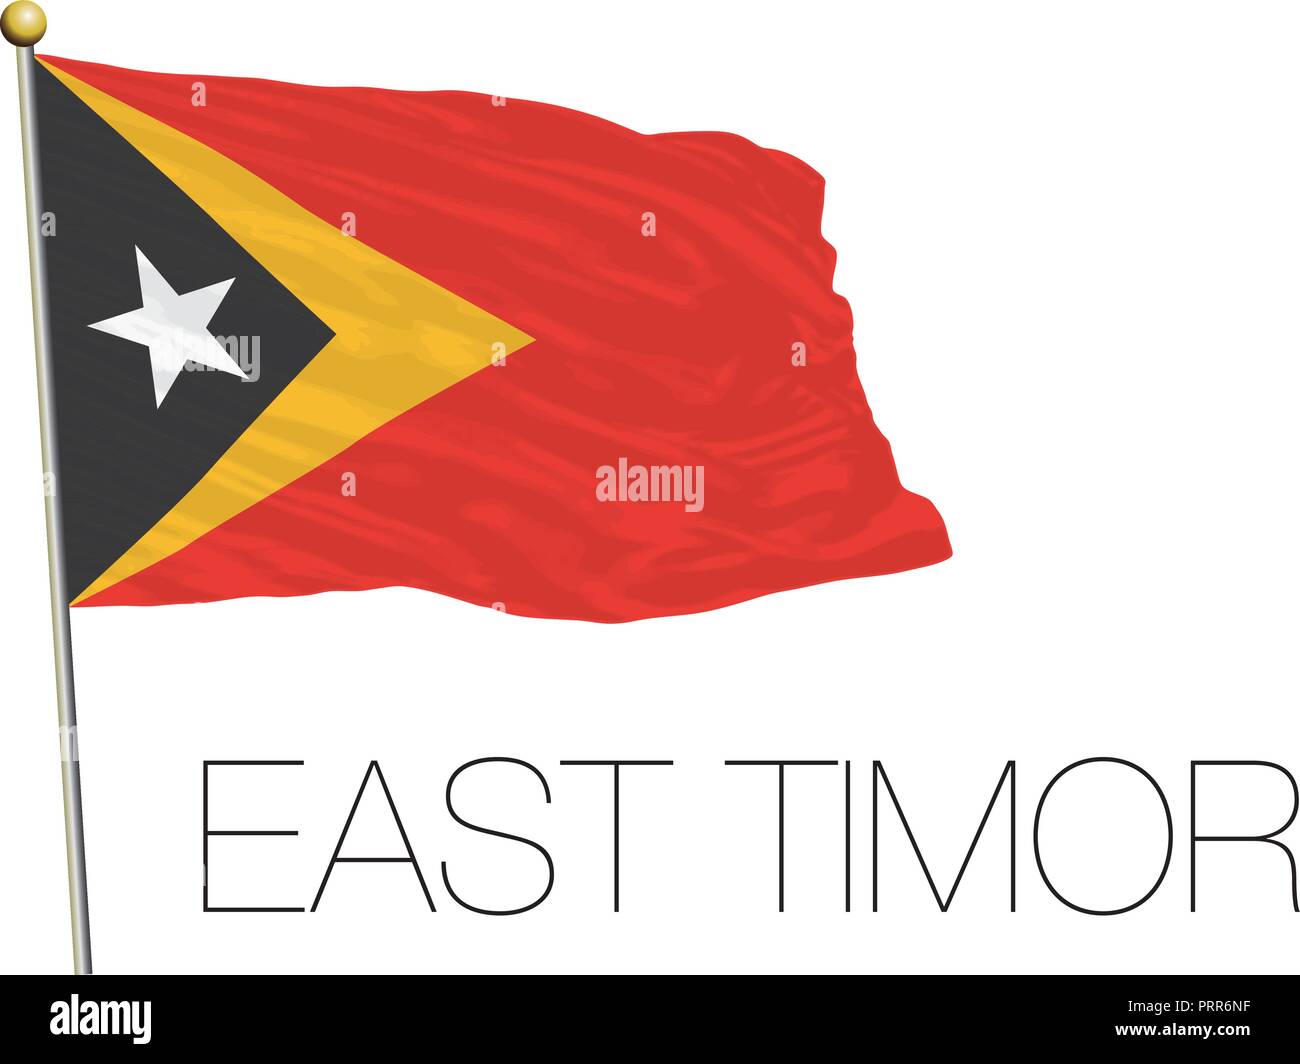 East Timor official flag, vector illustration Stock Vector